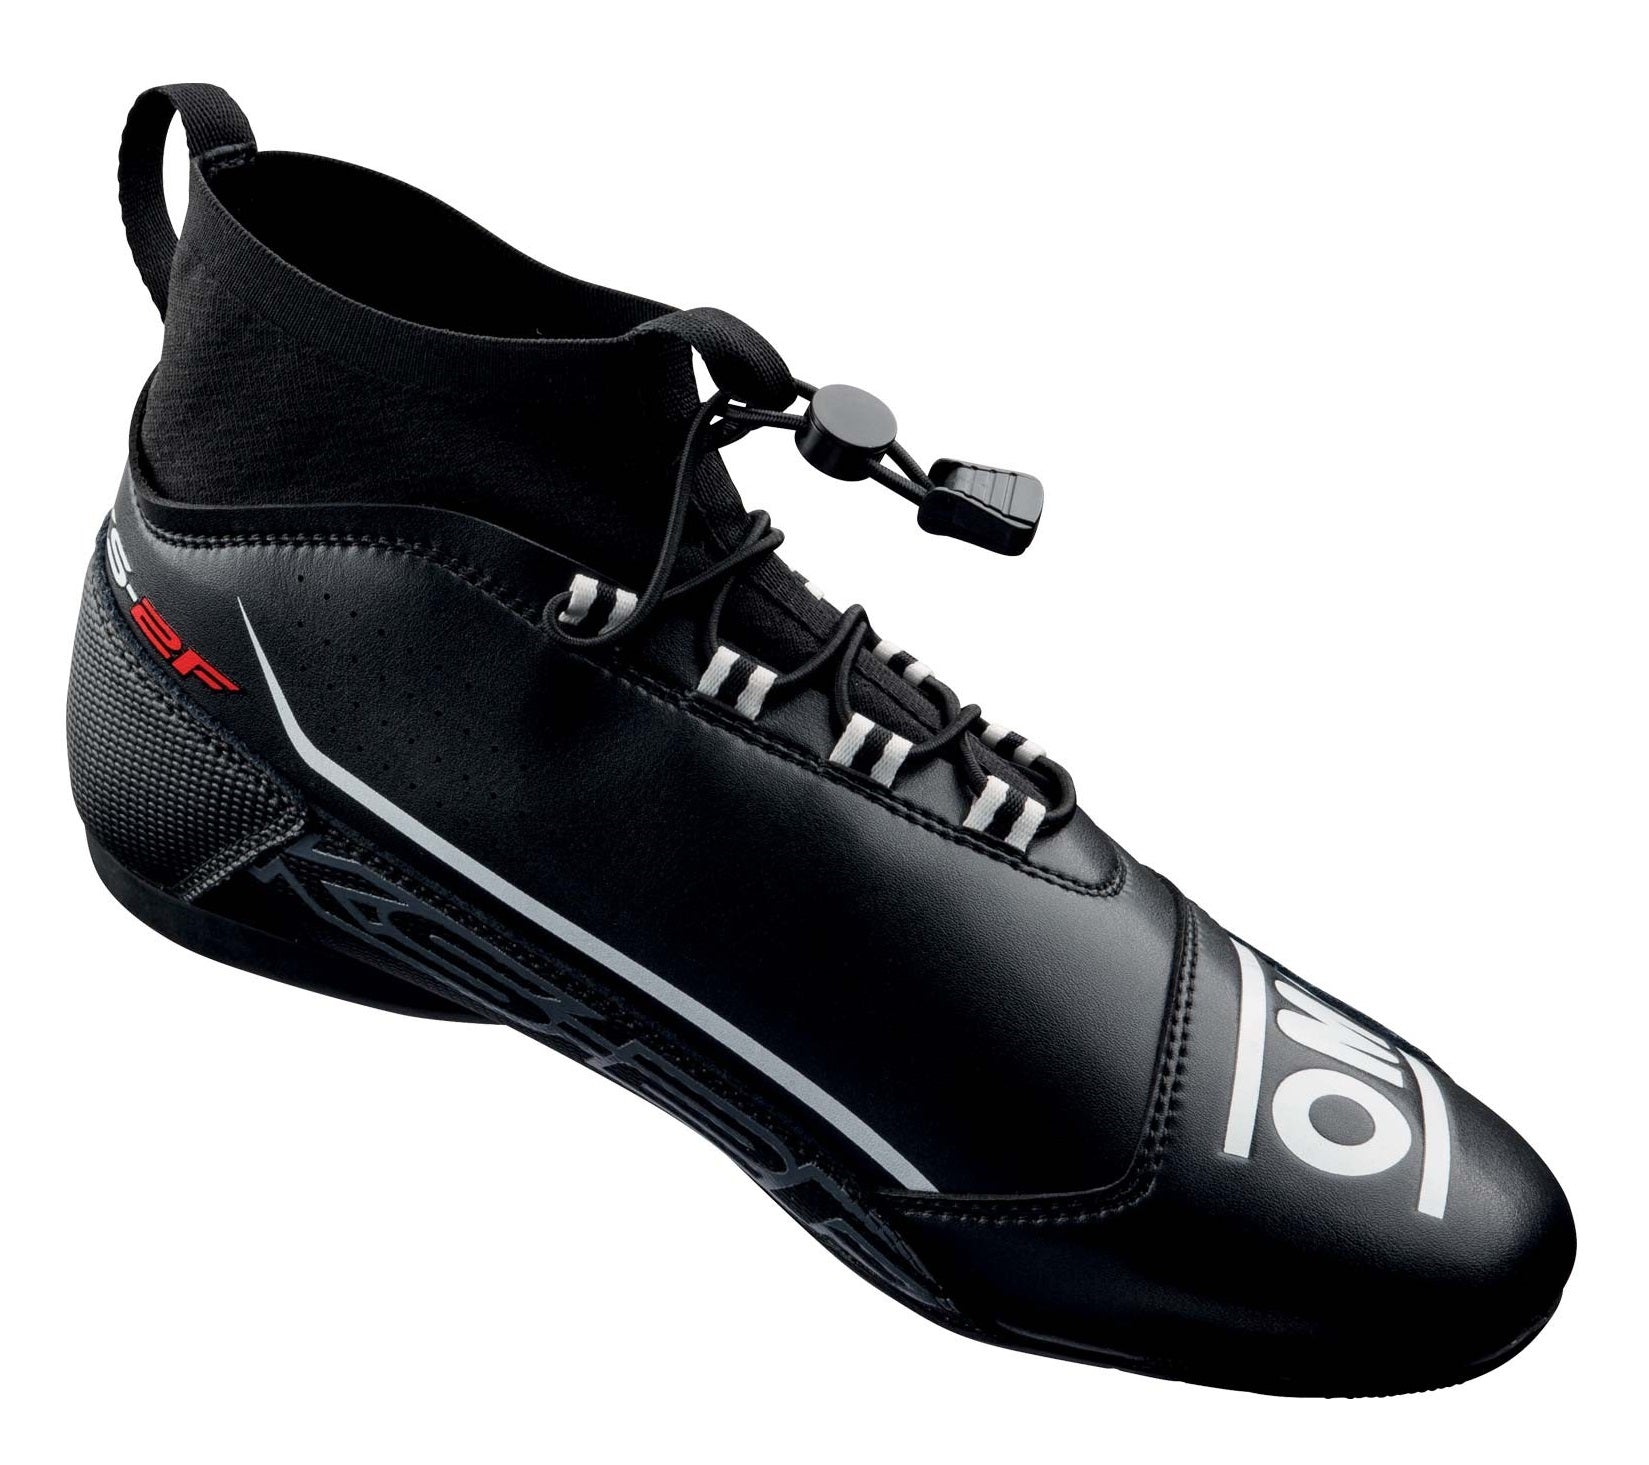 OMP KC0-0830-A01-071-42 KS-2F Karting shoes, black, size 42 Photo-1 